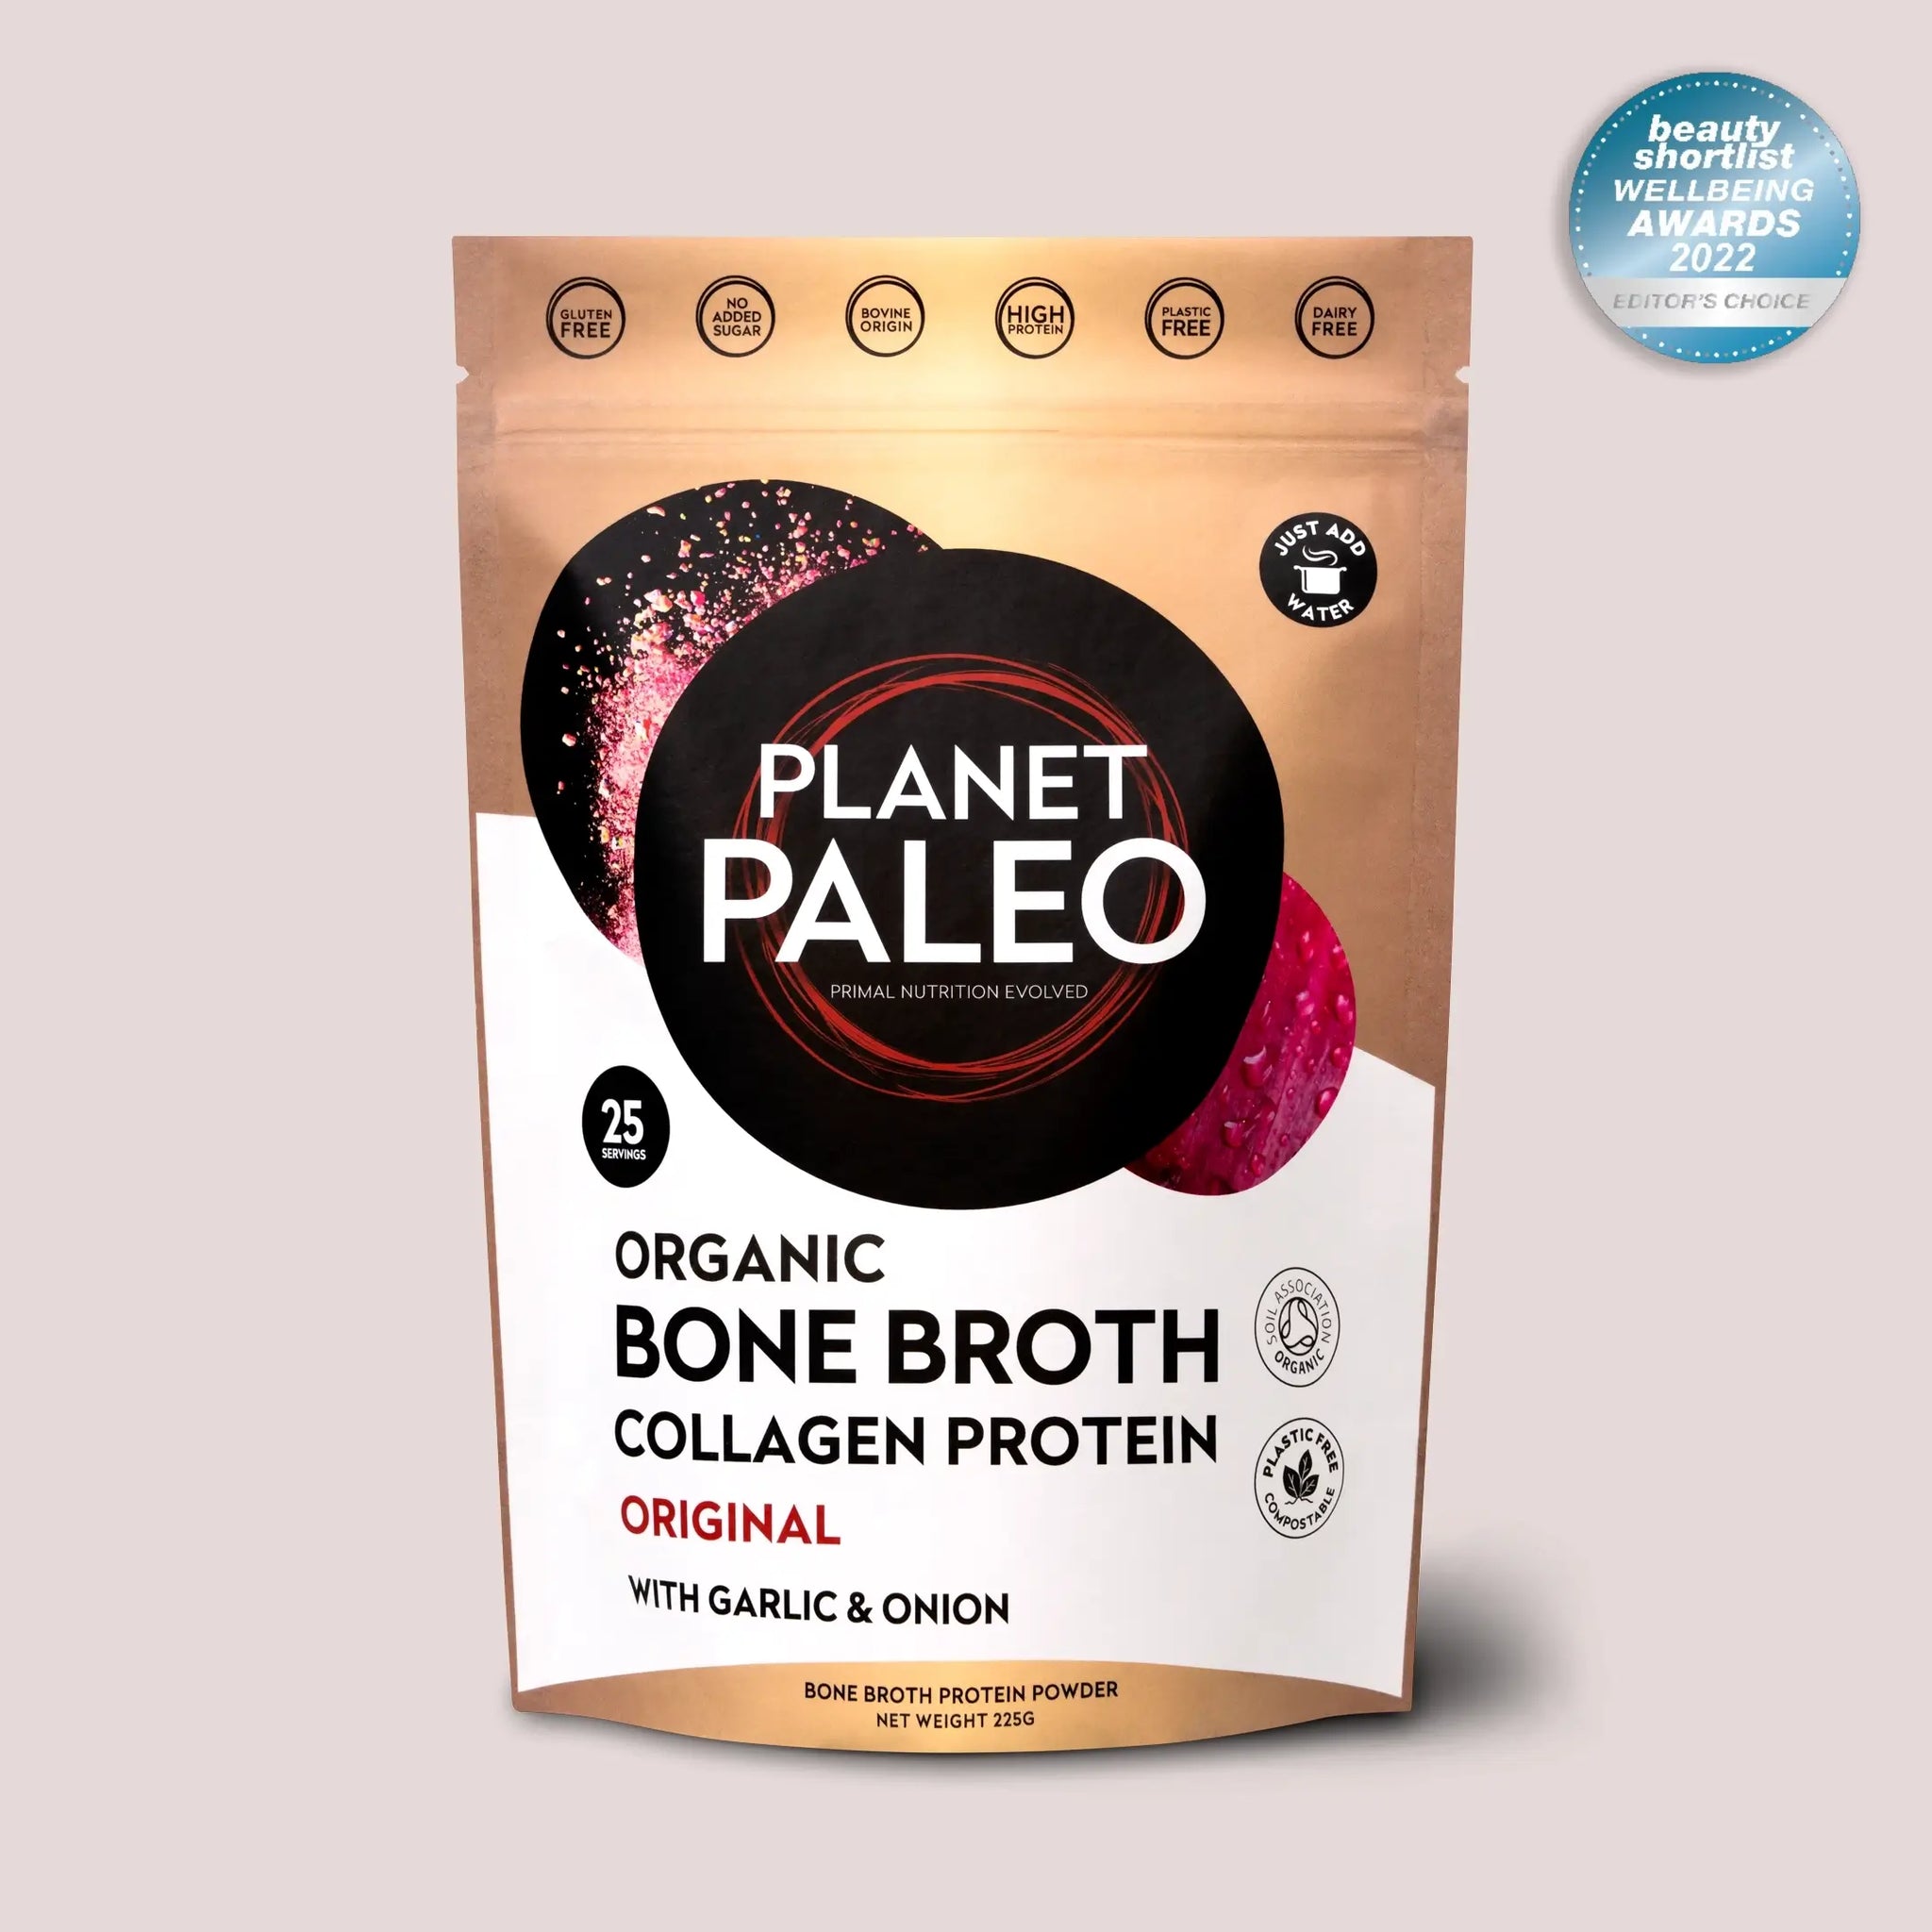 Organic Bone Broth - Original